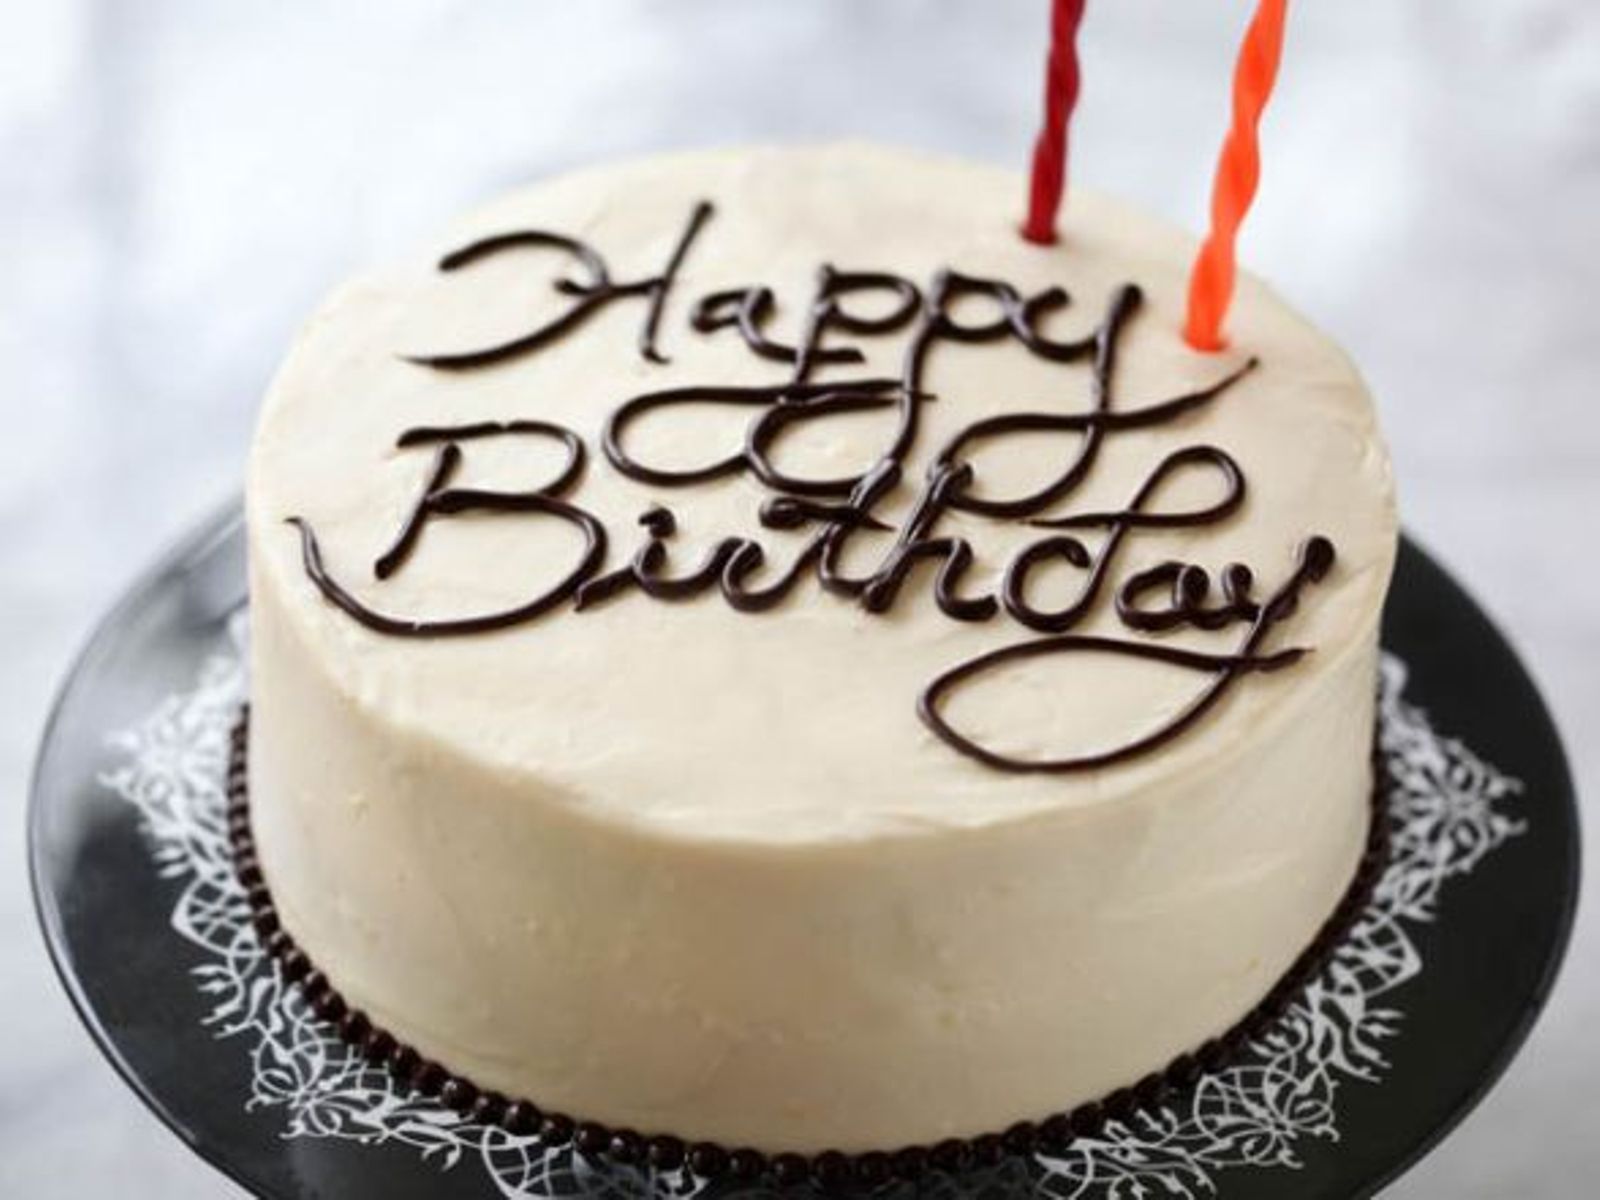 http://nycbirthdaycakes.com/wp-content/uploads/2015/11/birthday-cake-images-5.jpg